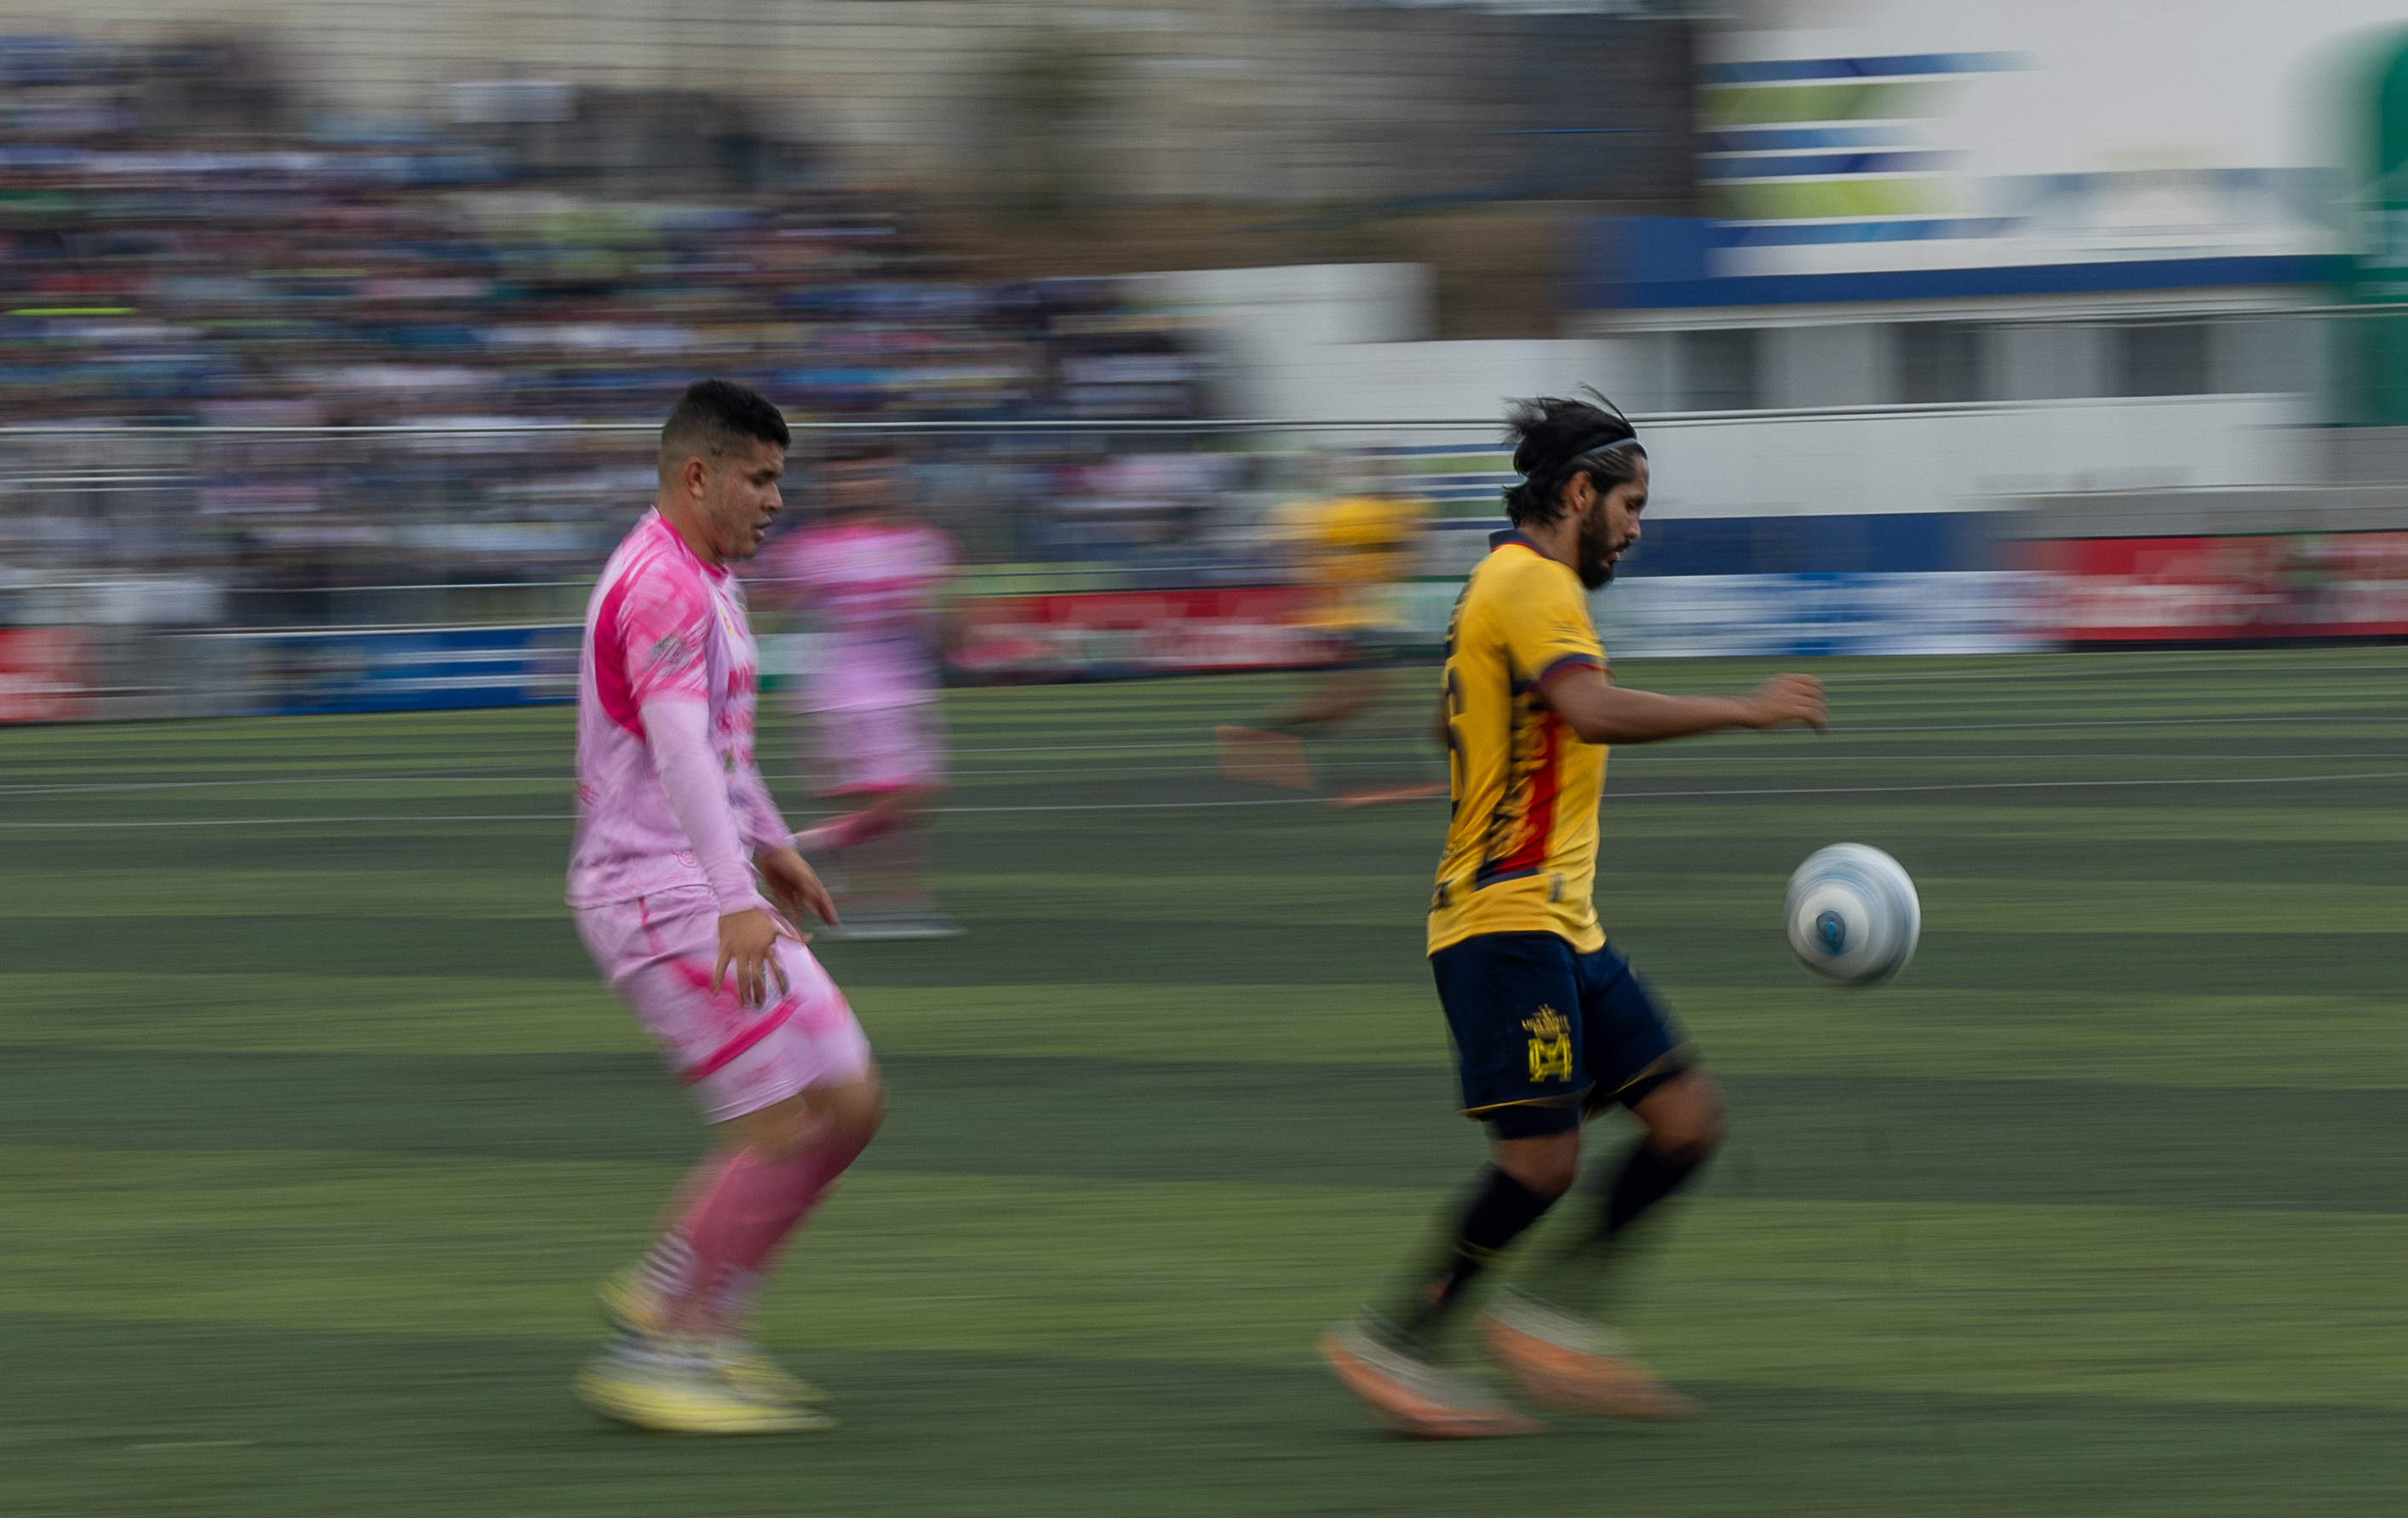 El volante del Municipal, José Morales controla el balón ante el defensor del Mixco, Andrés Palma.